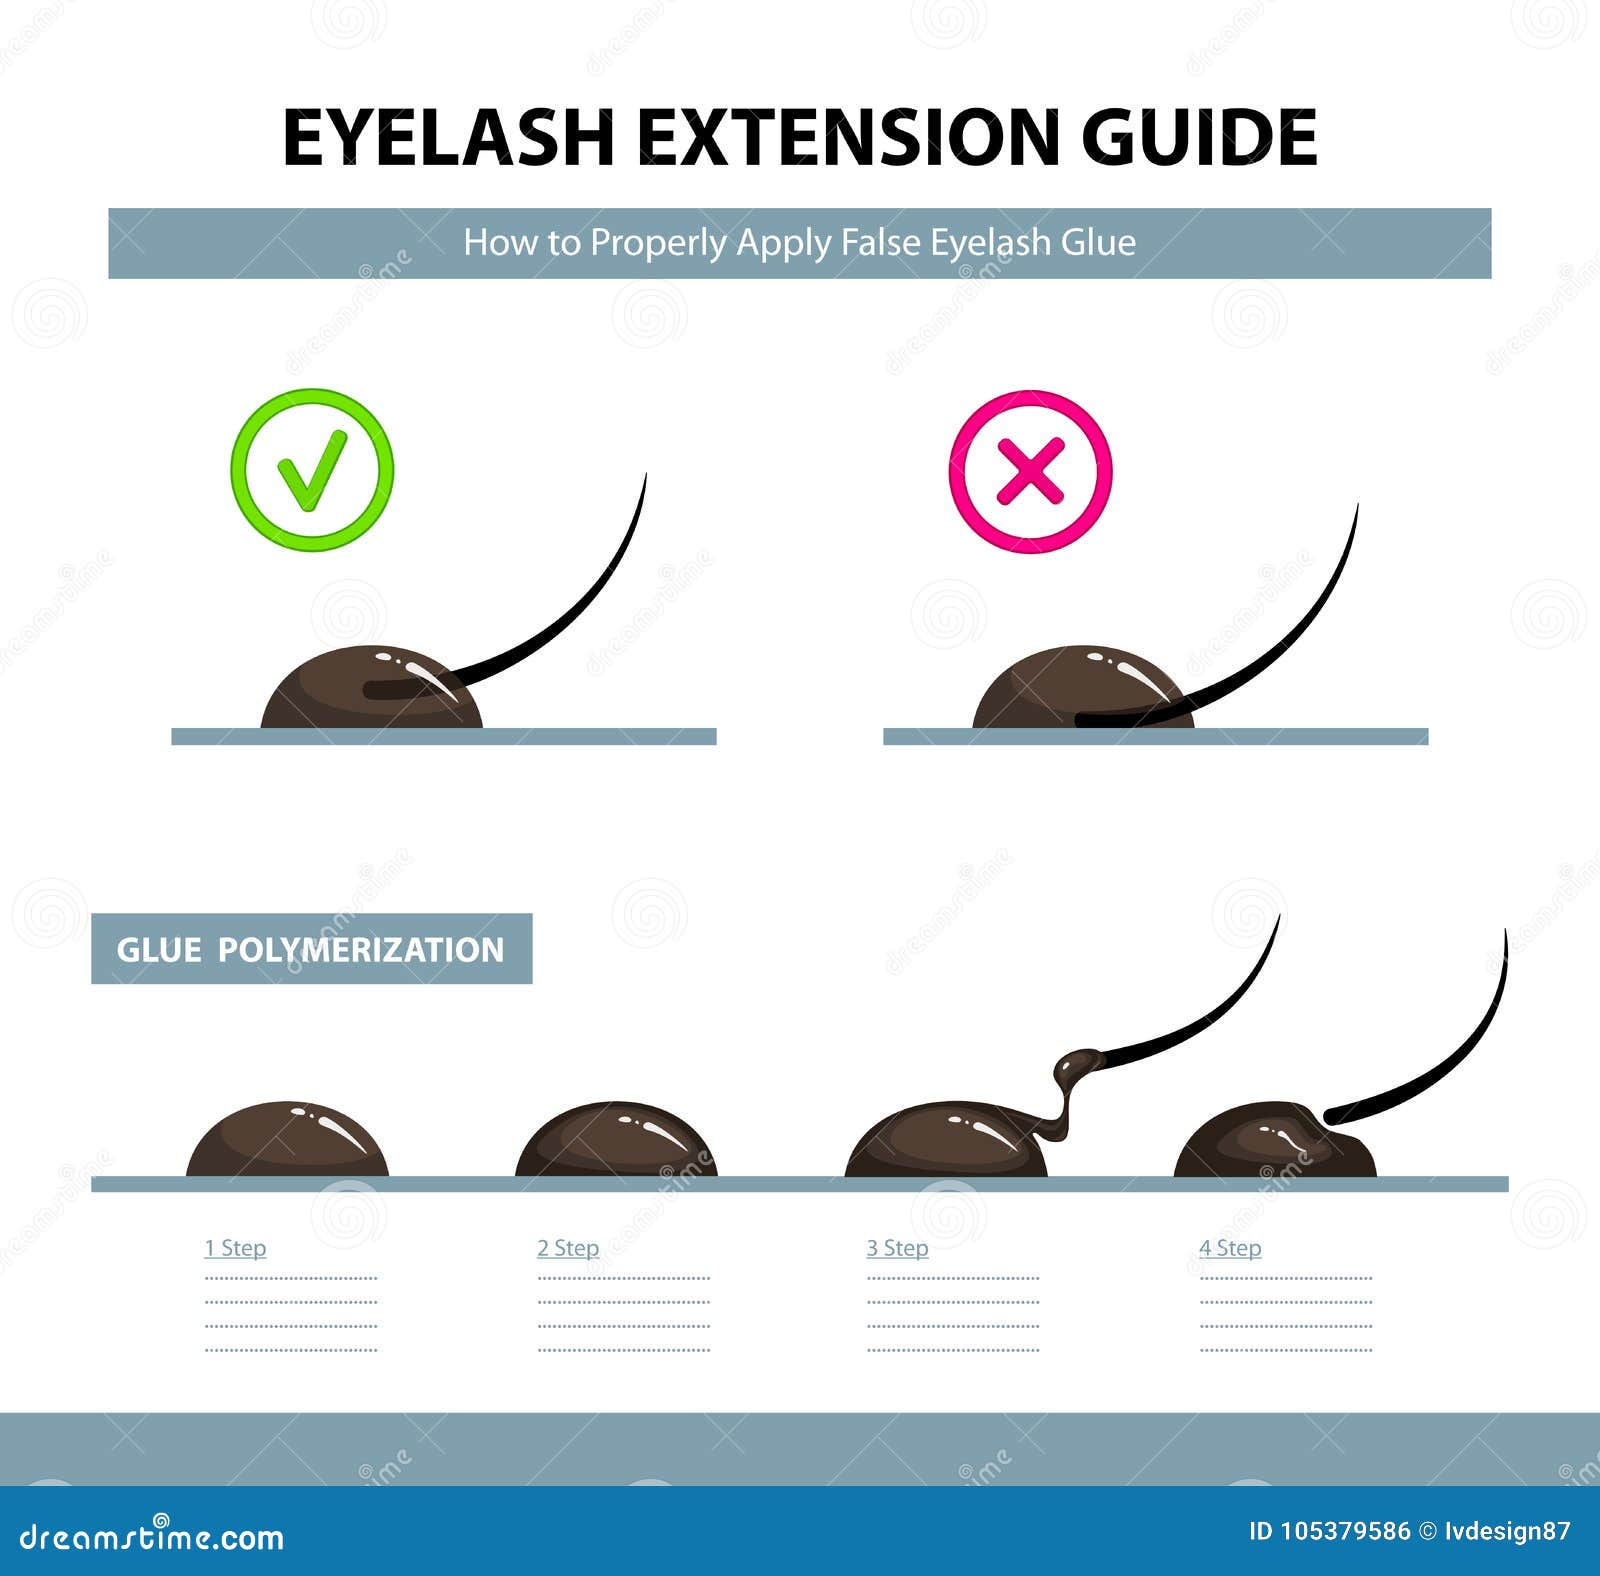 eyelash extension guide. how to properly apply false eyelash glue. glue polymerization step by step